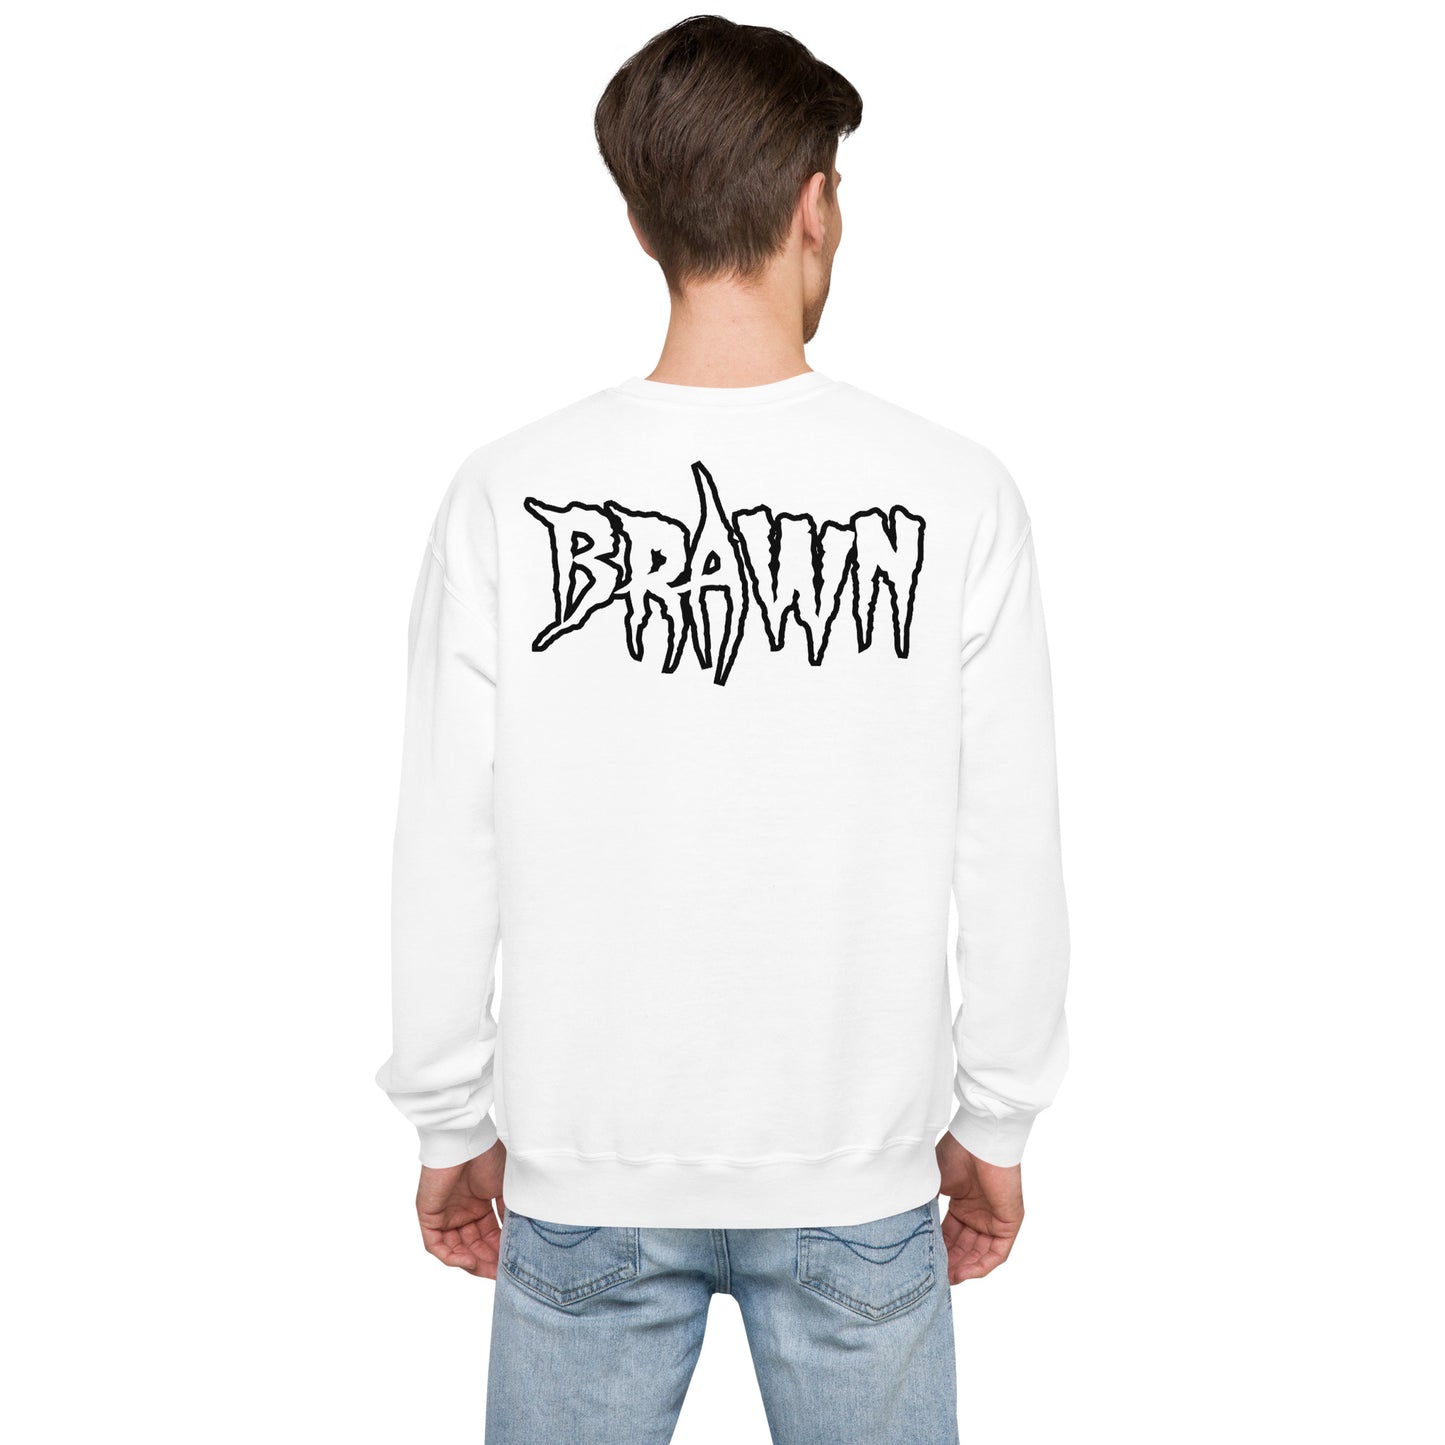 Captain BRAWN Fleece Sweatshirt